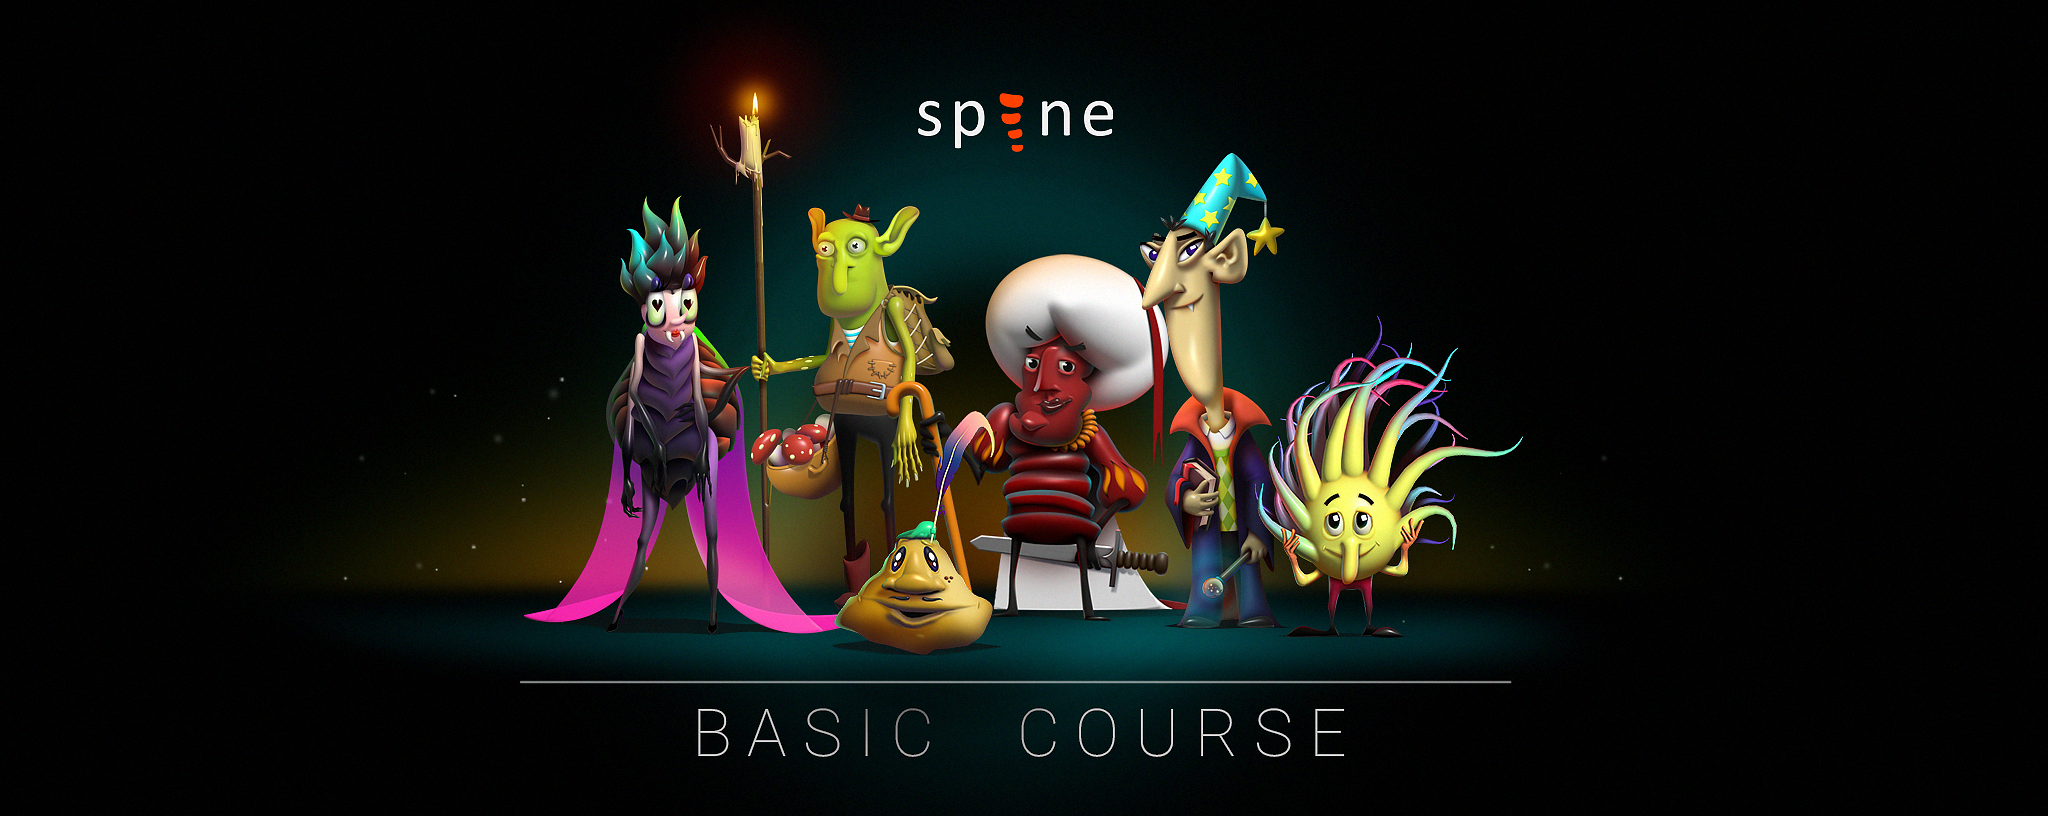 Basic Course 